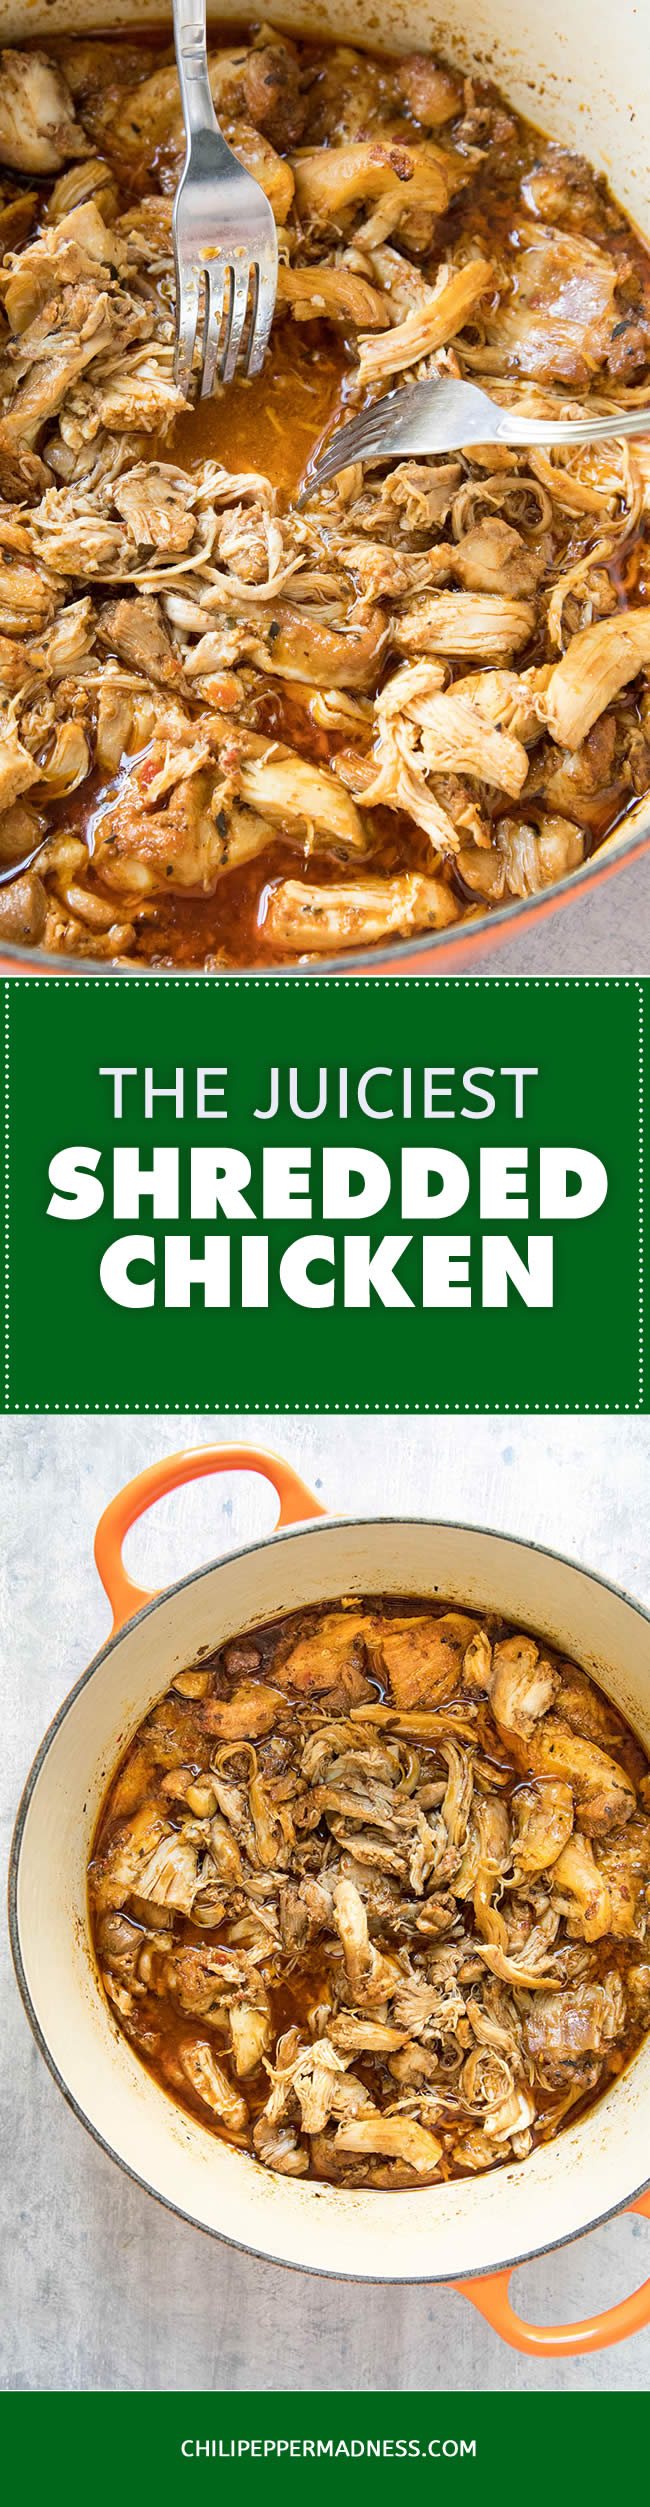 The Juiciest Shredded Chicken - Recipe